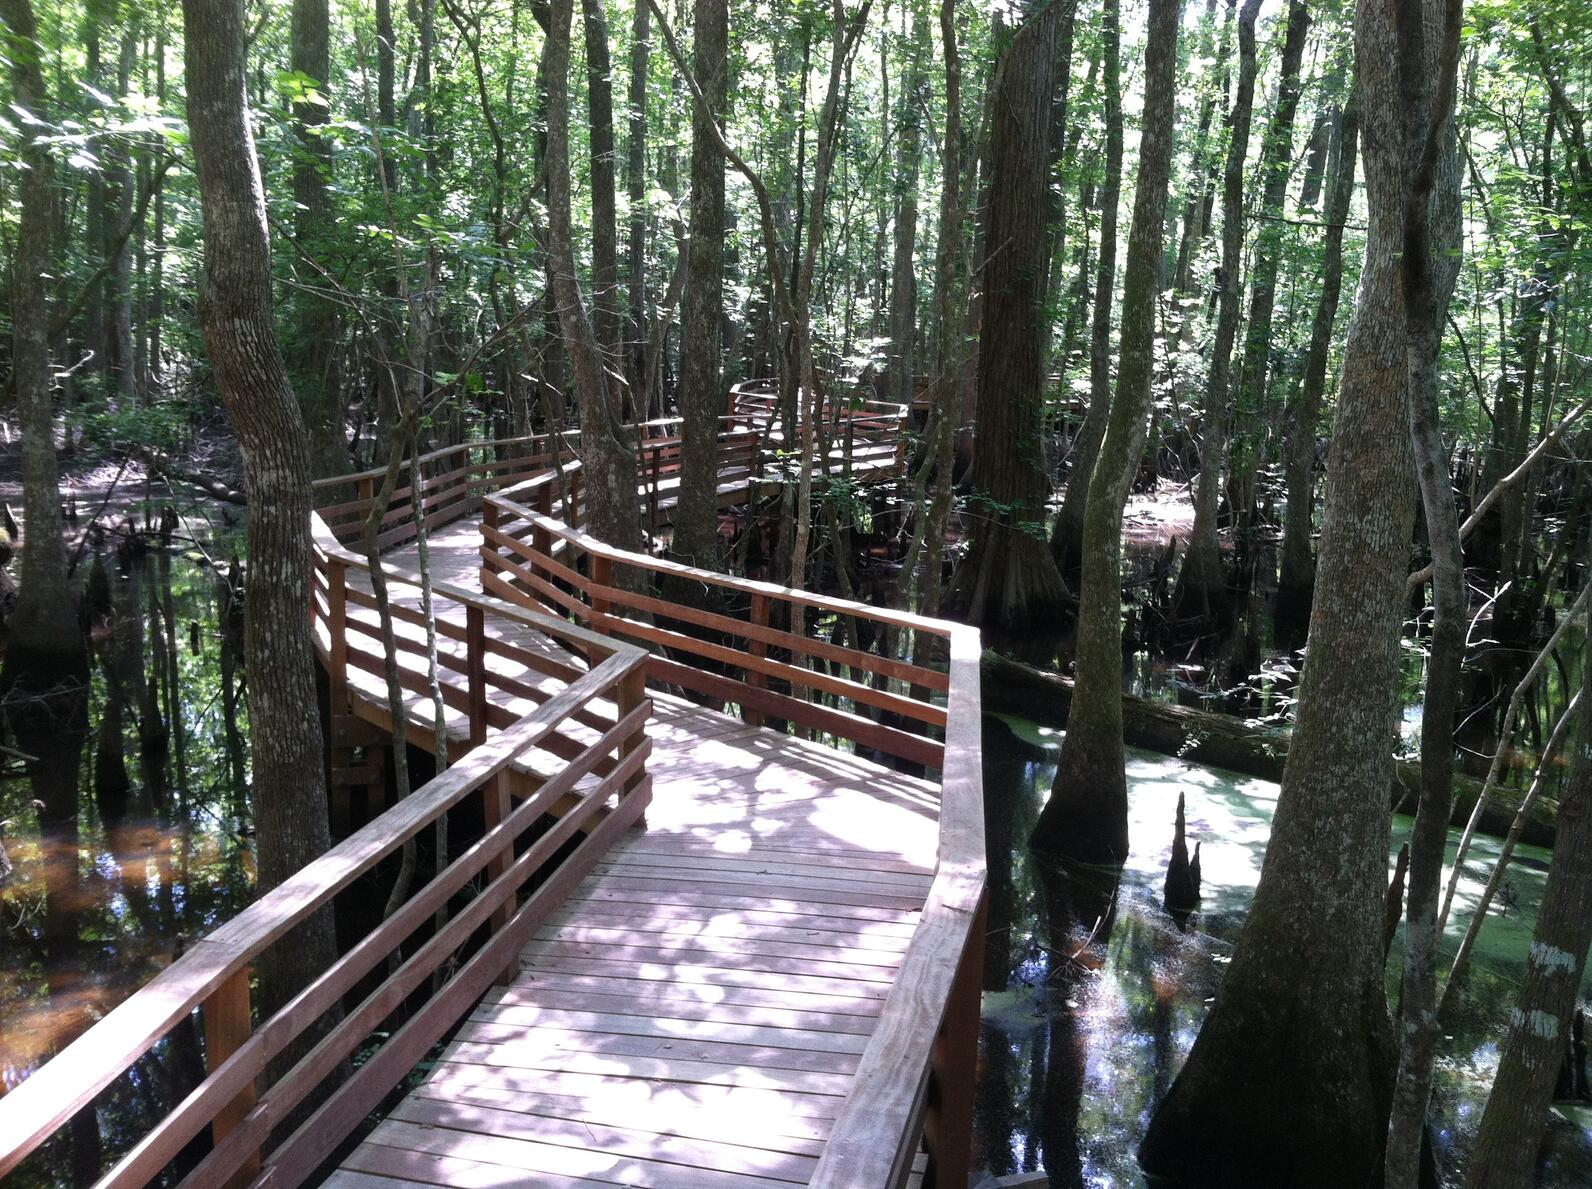 A brightly lit boardwalk meanders through a forest swamp